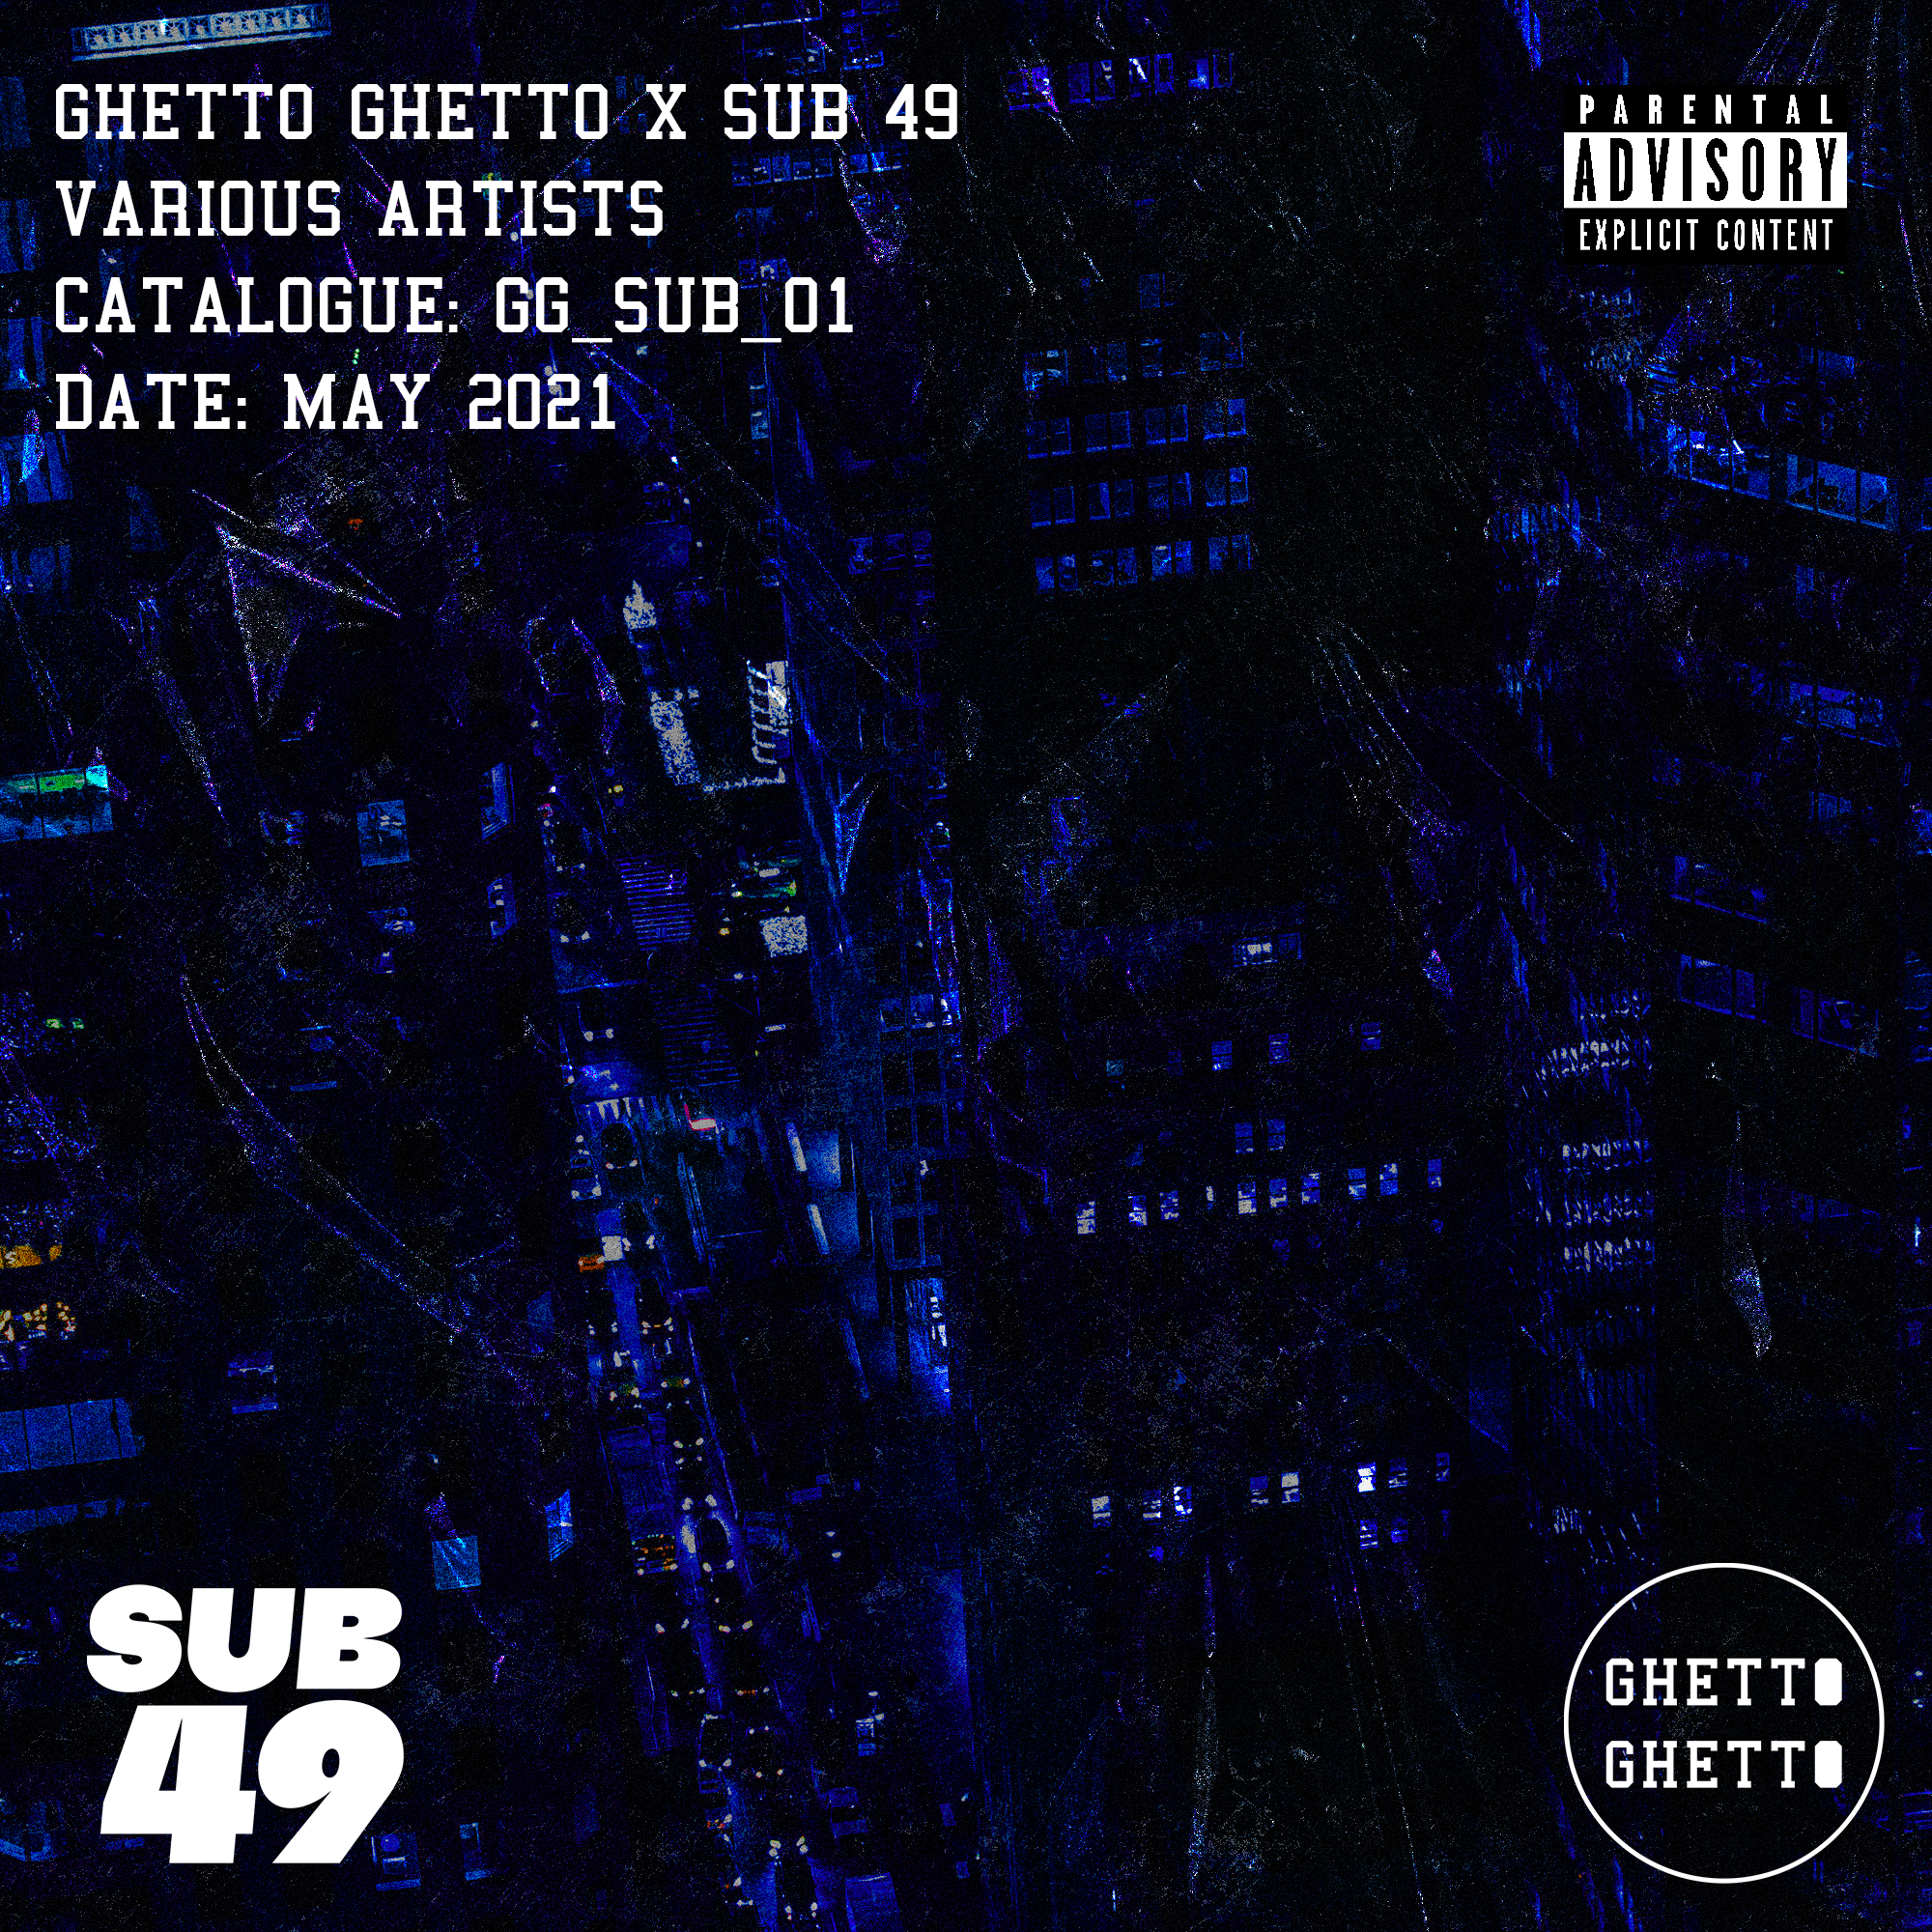 GGSUB_01 - Ghetto Ghetto x Sub 49